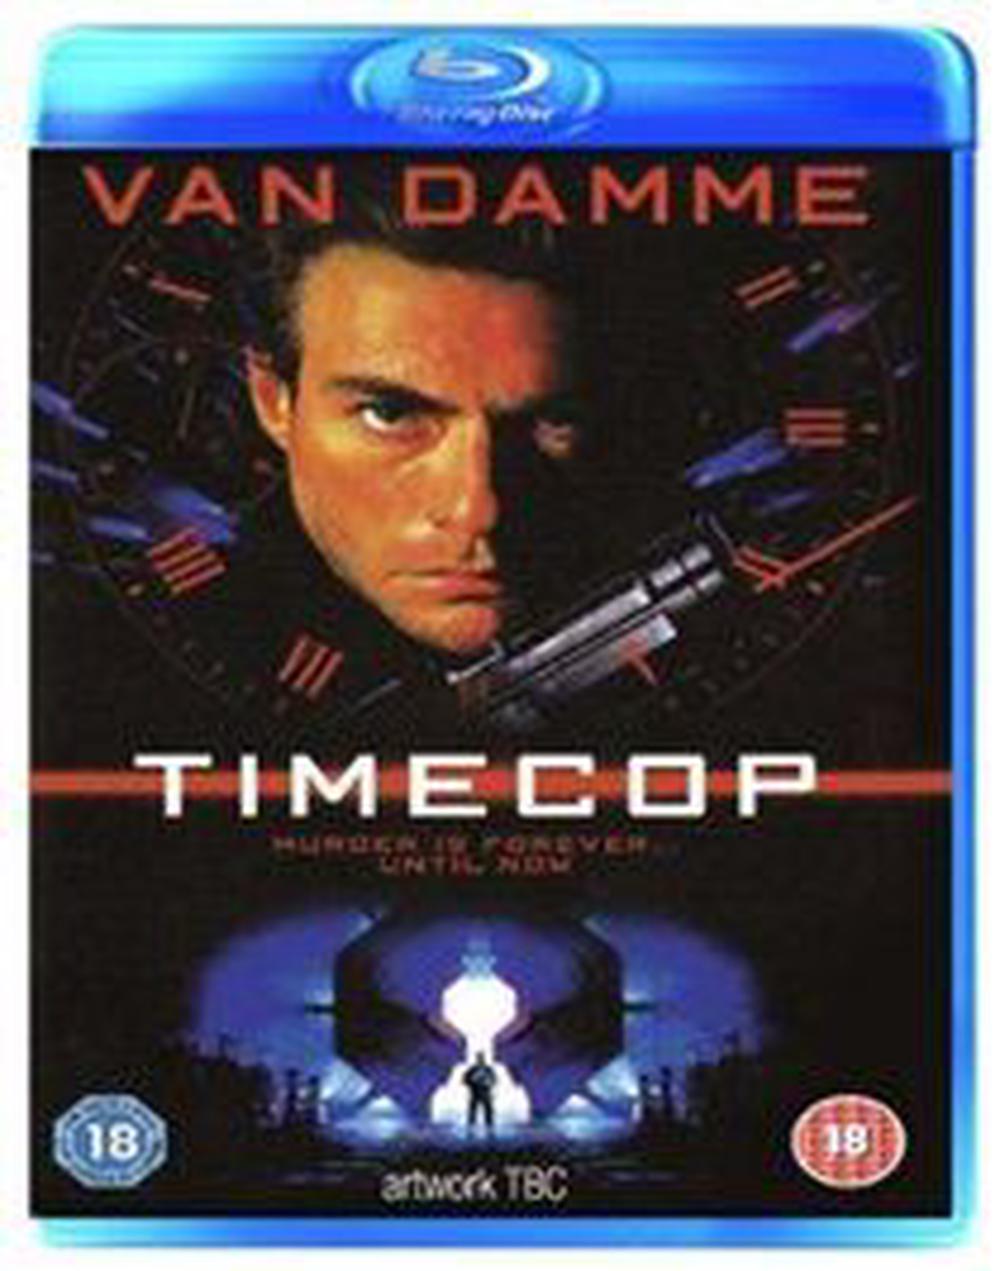 timecop movie full